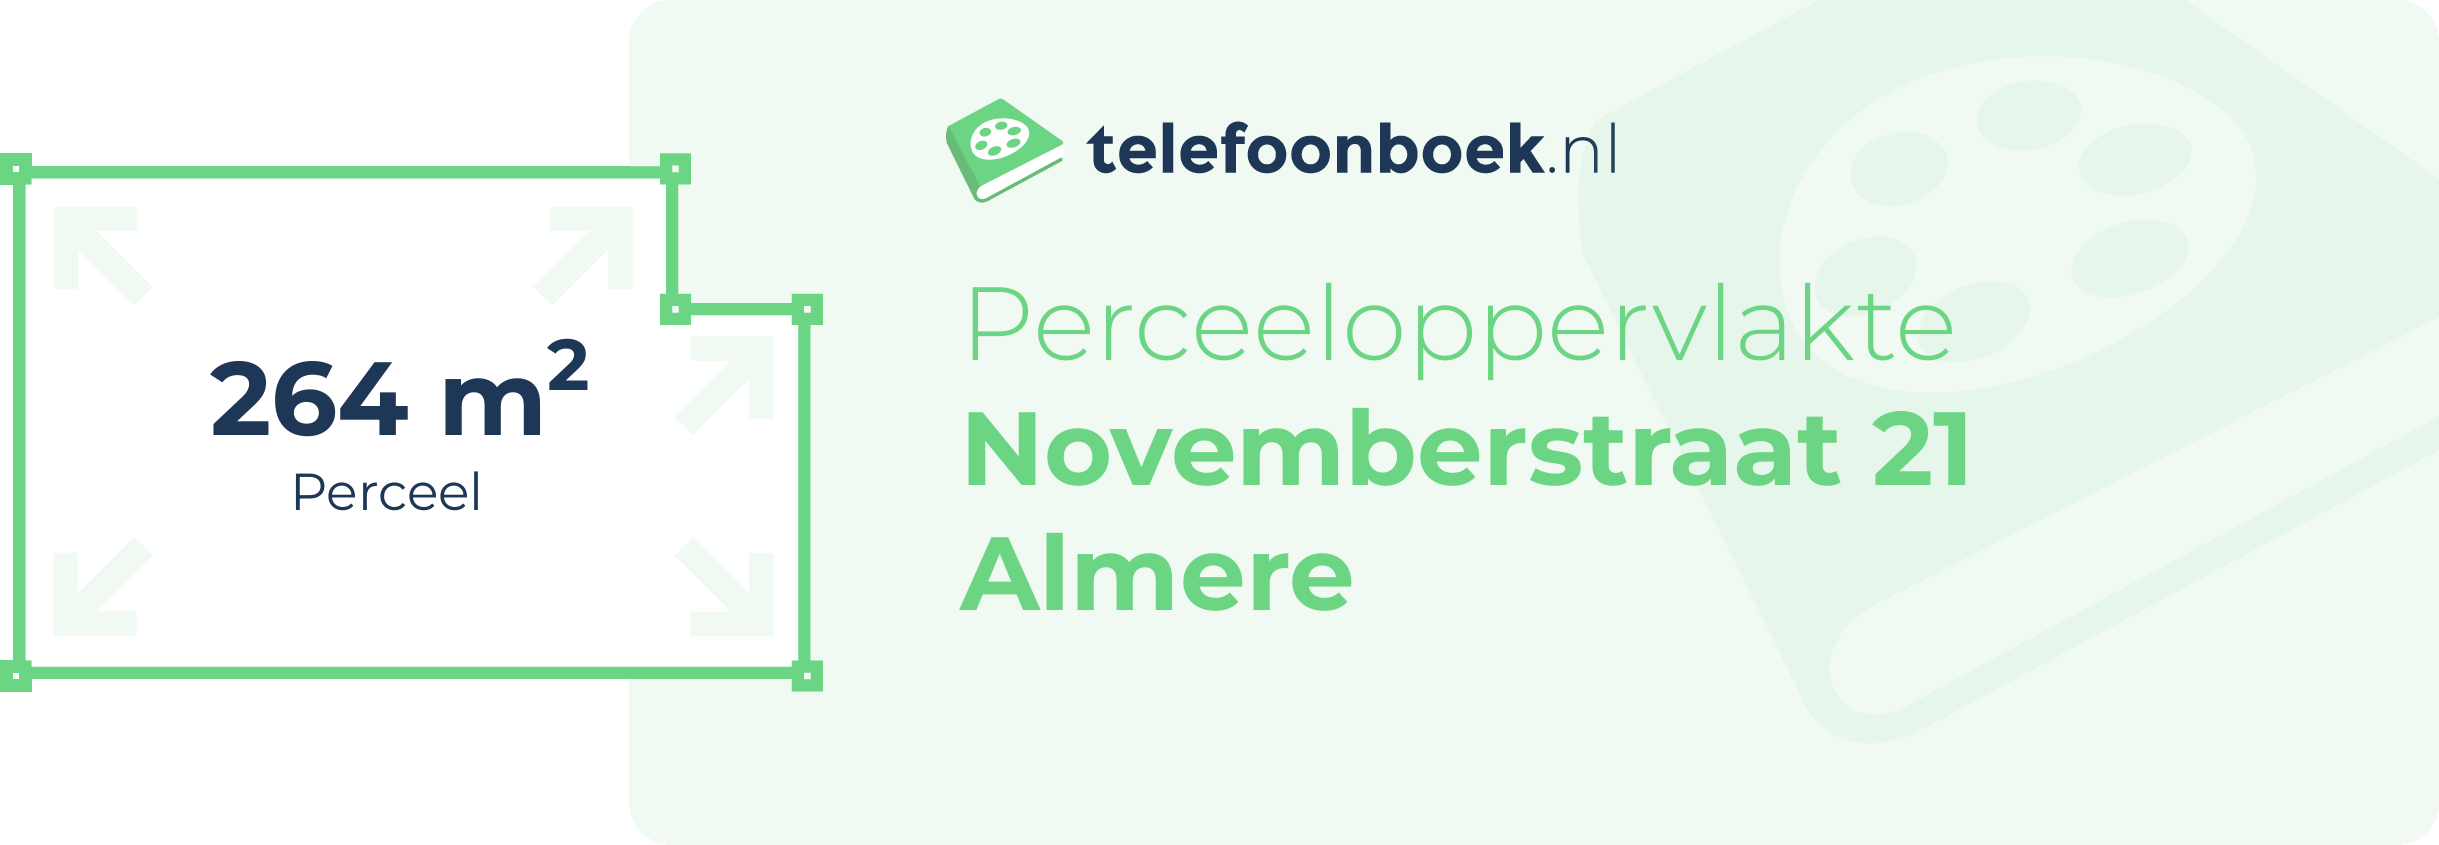 Perceeloppervlakte Novemberstraat 21 Almere